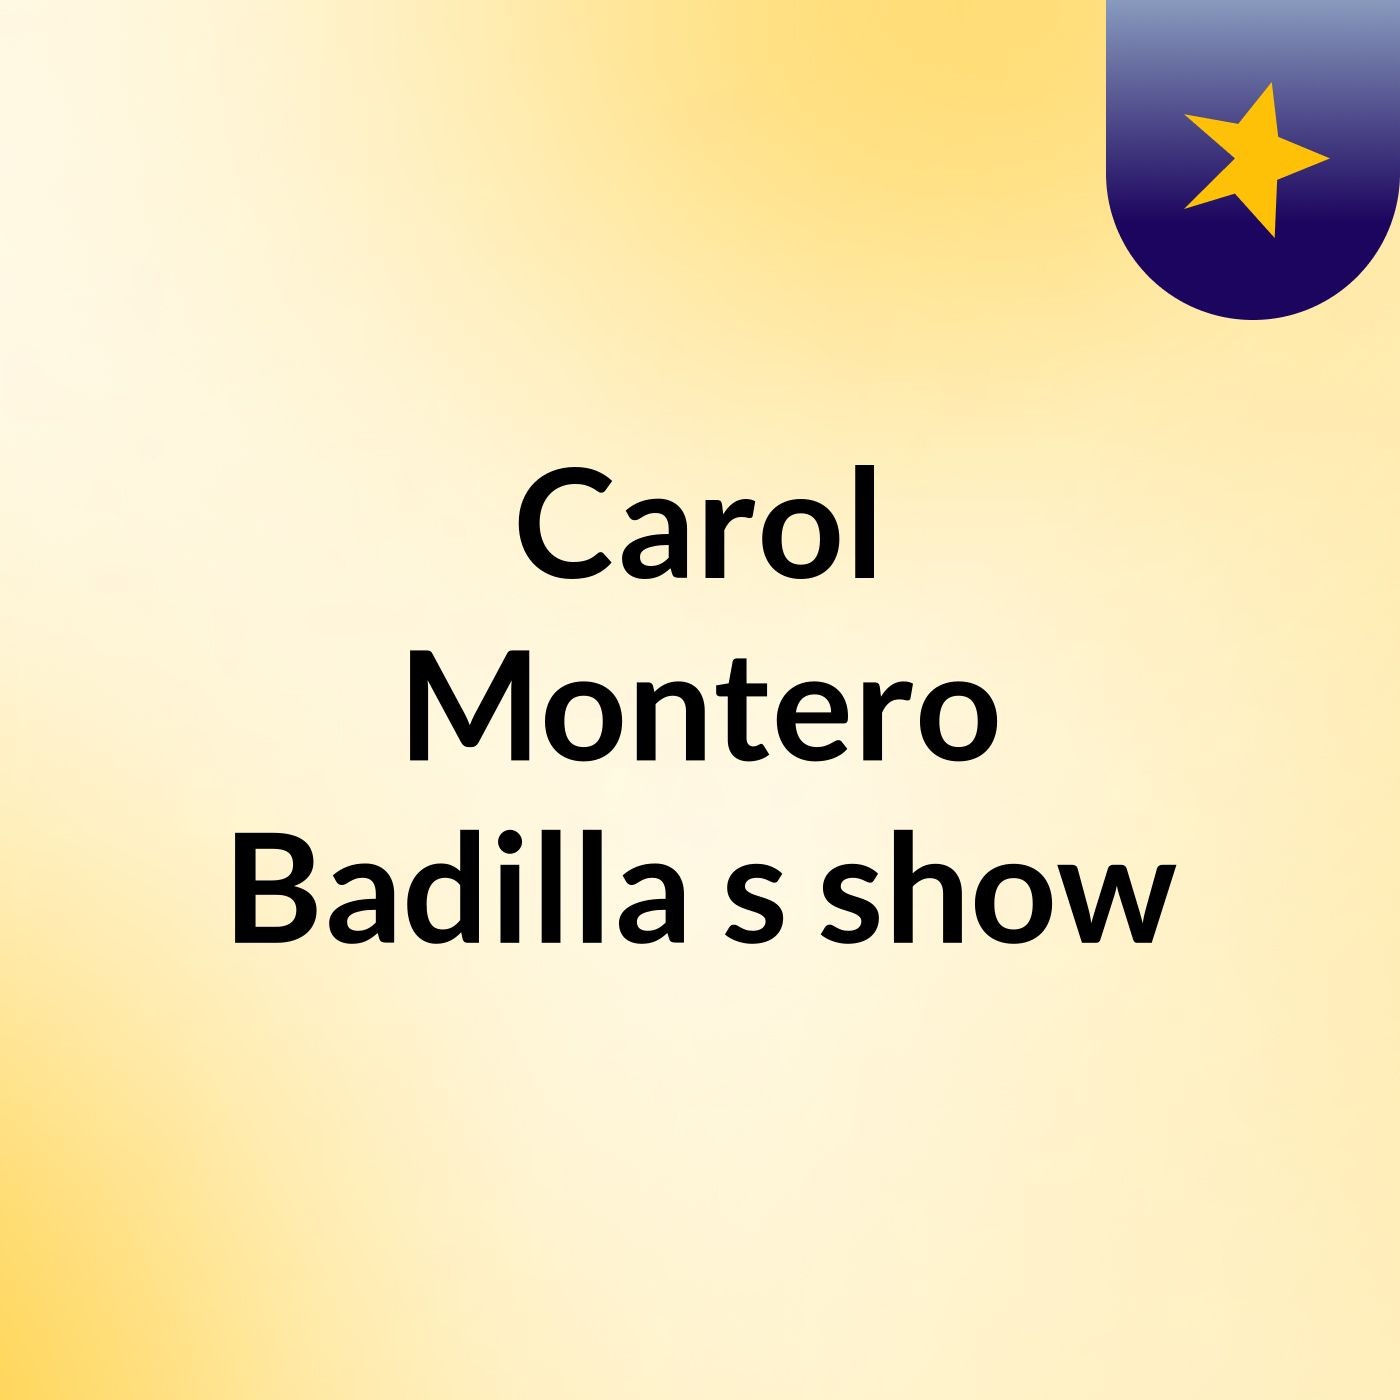 Carol Montero Badilla's show